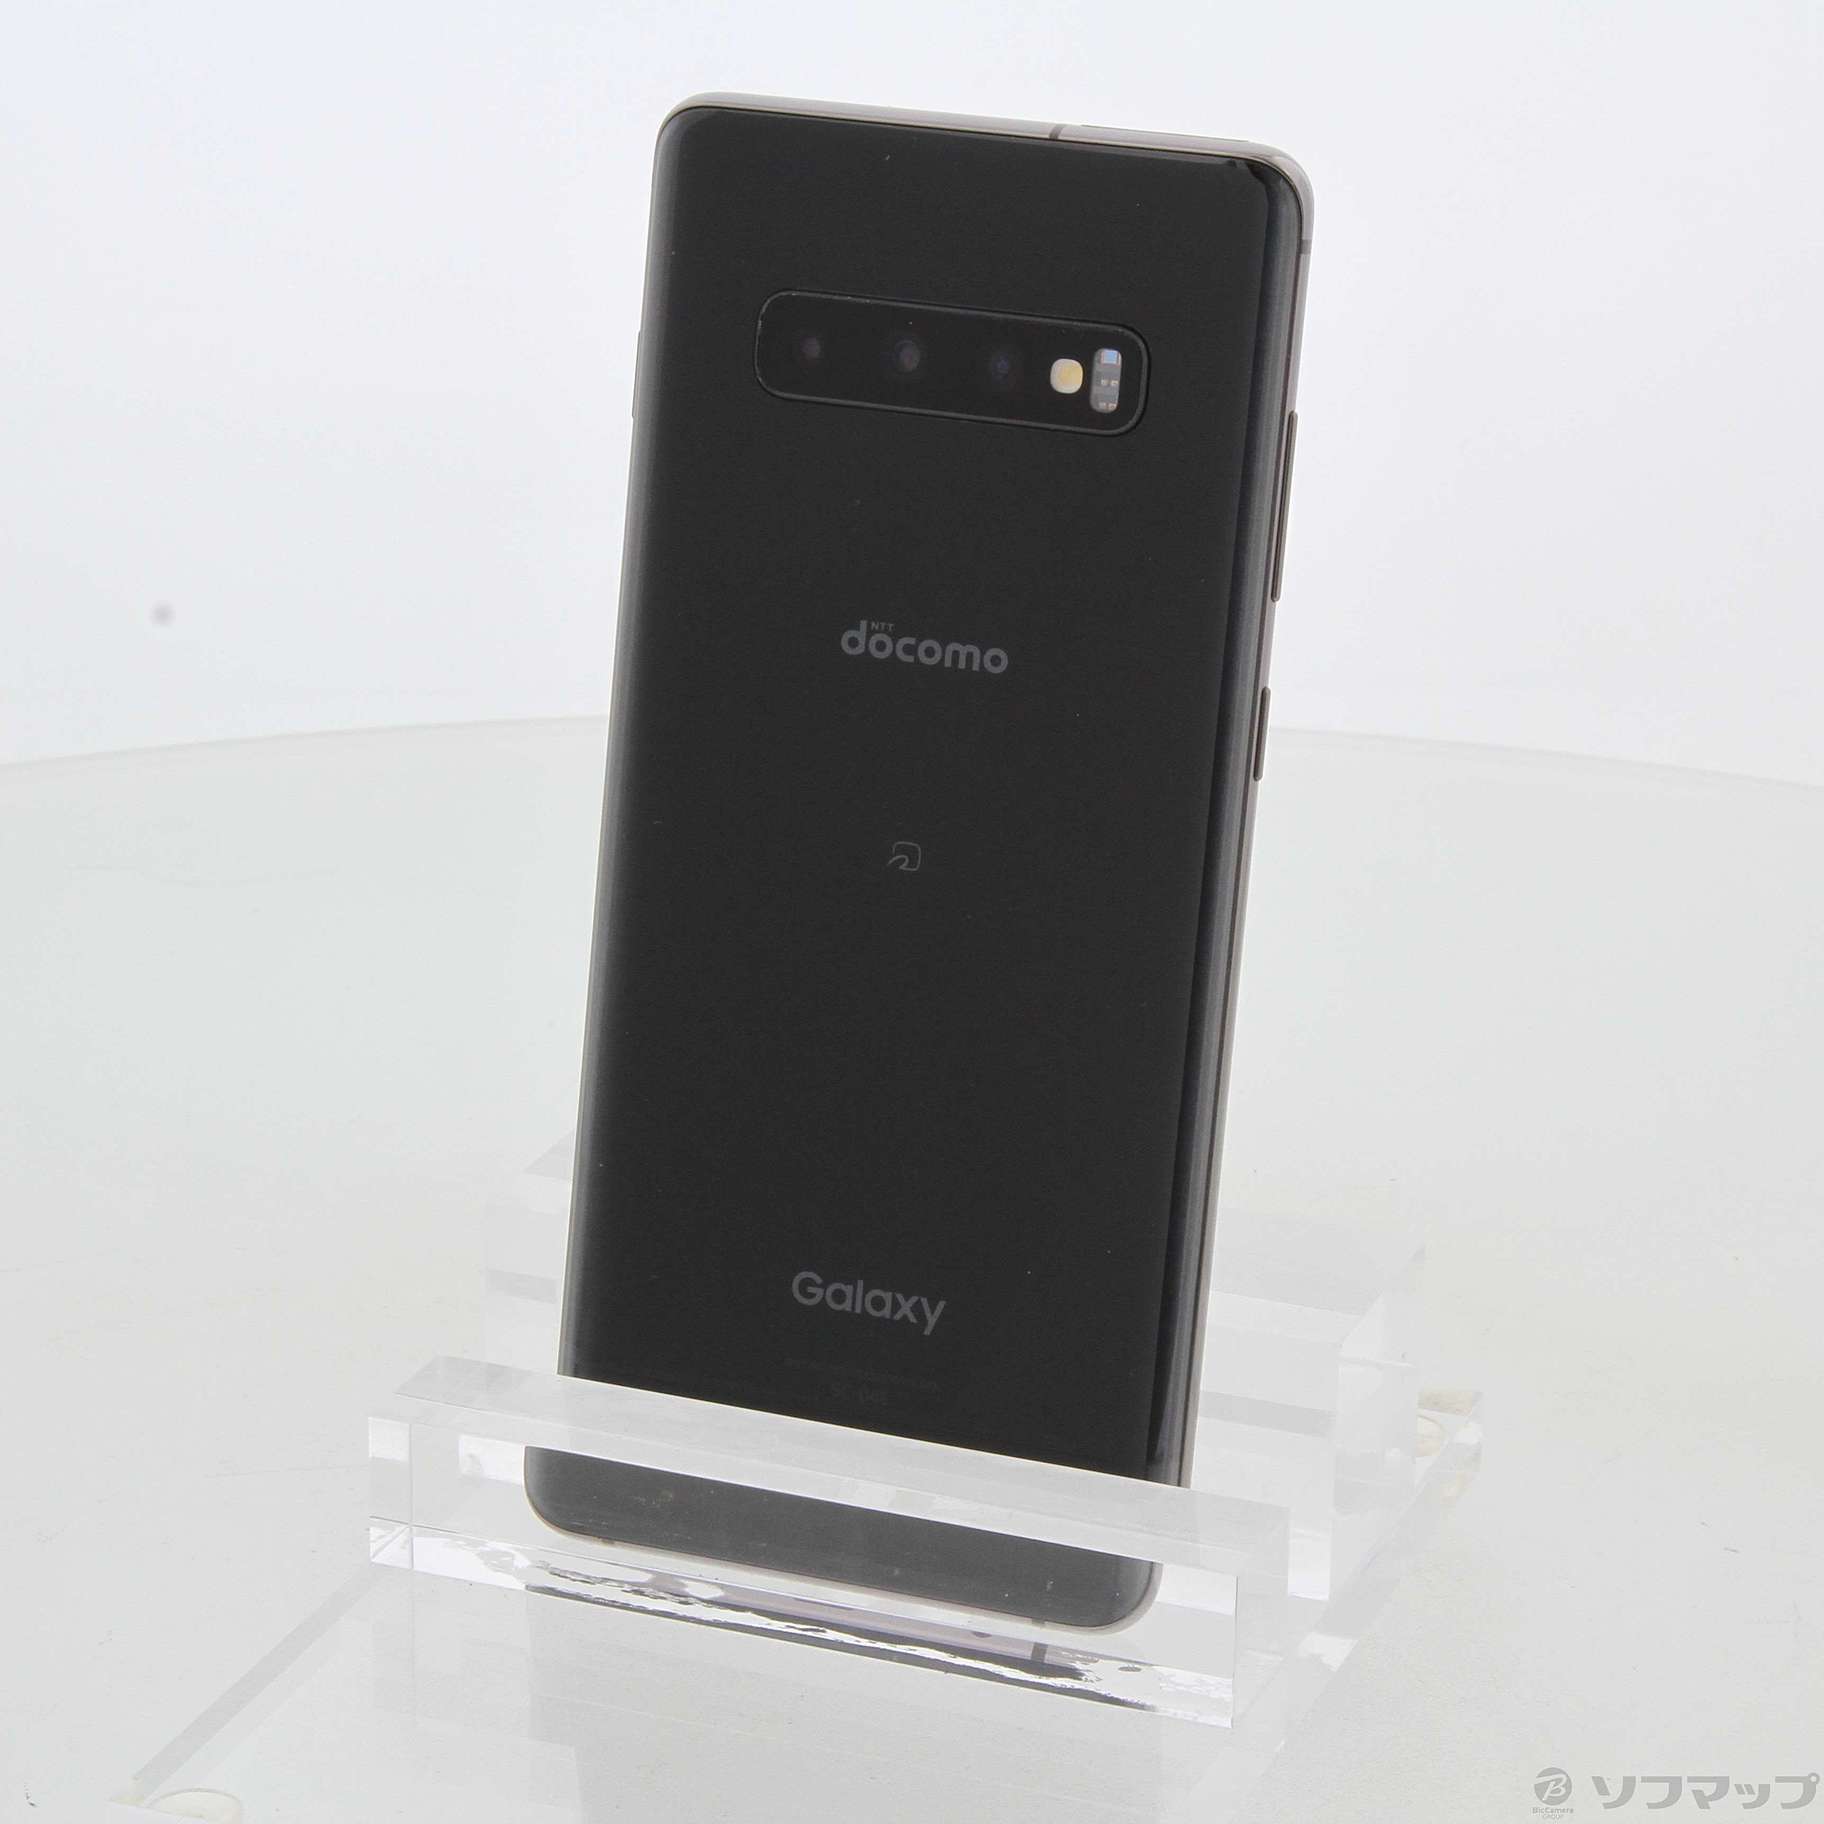 Galaxy S10＋ Prism Black 128 GB docomo 箱有即購入可能大歓迎です